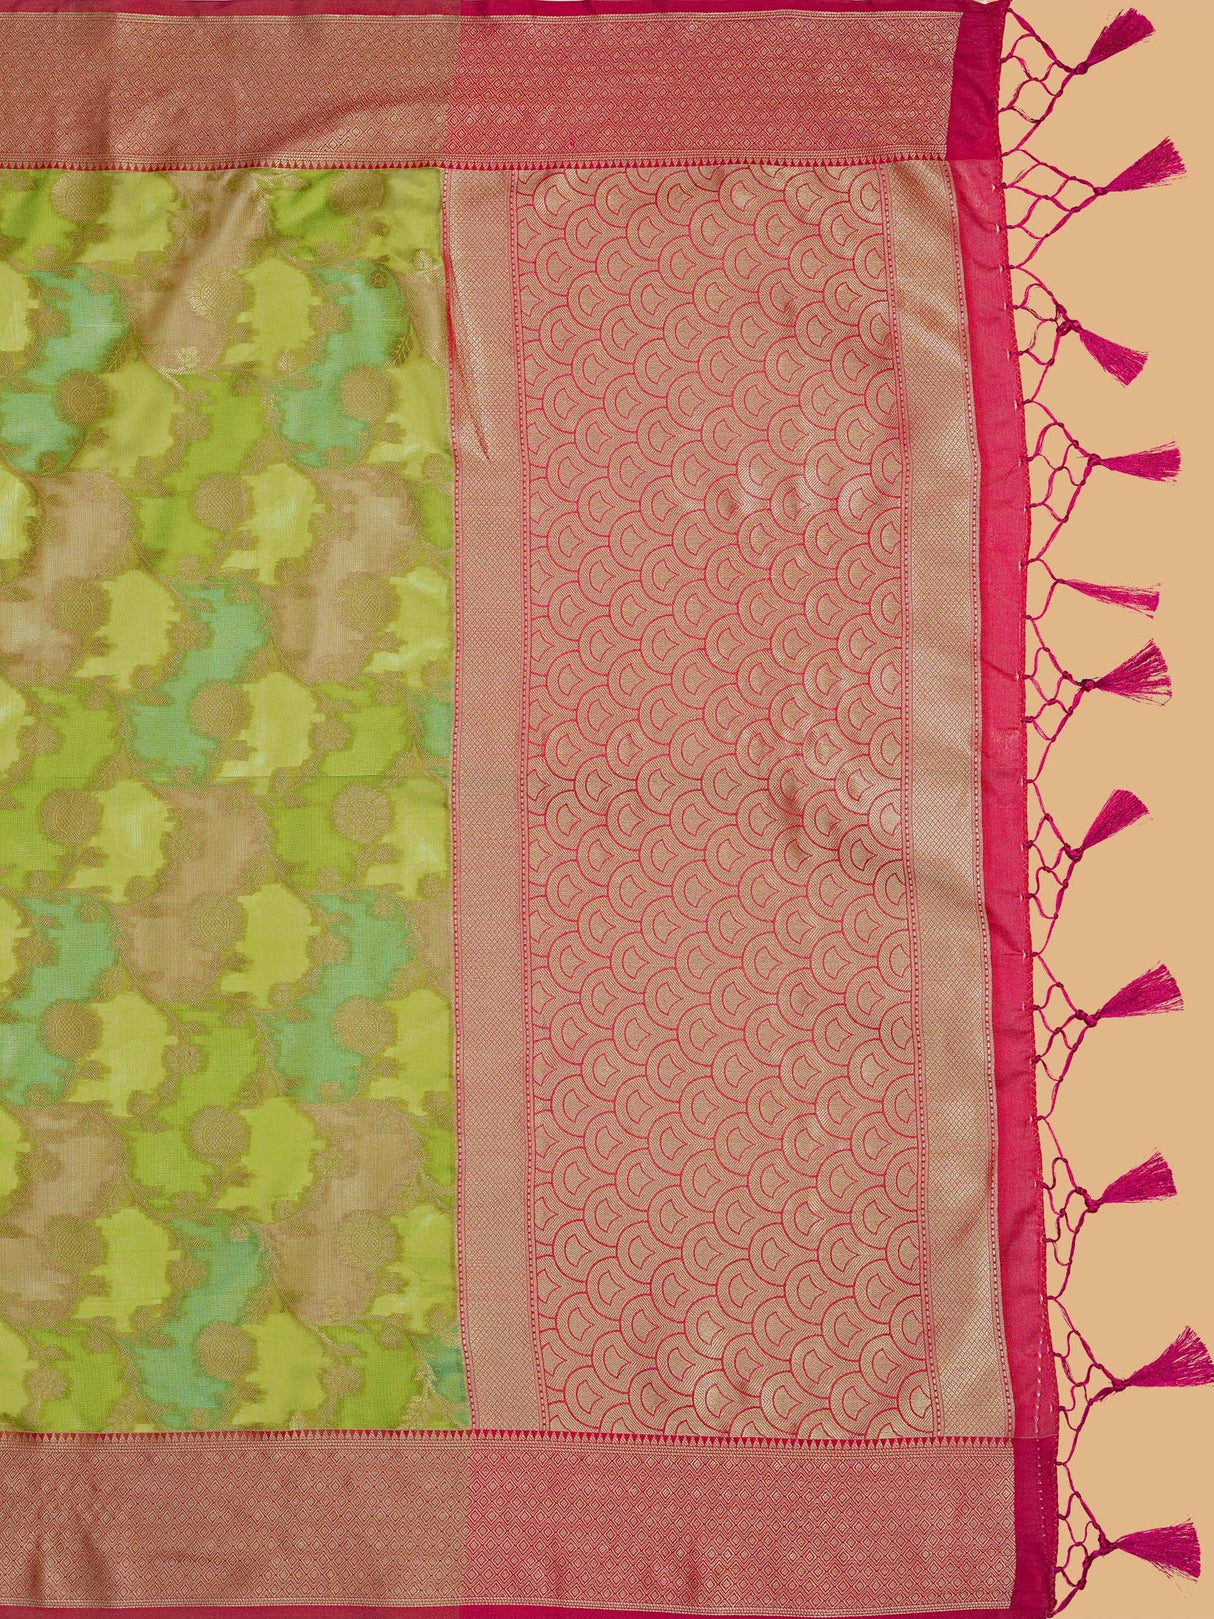 Mimosa Women's Woven Design Banarasi Art Silk Saree With Blouse Piece : SA00001214PGFREE